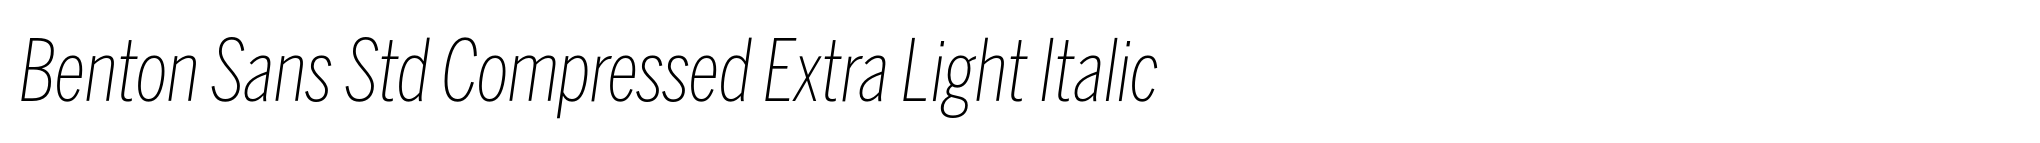 Benton Sans Std Compressed Extra Light Italic image